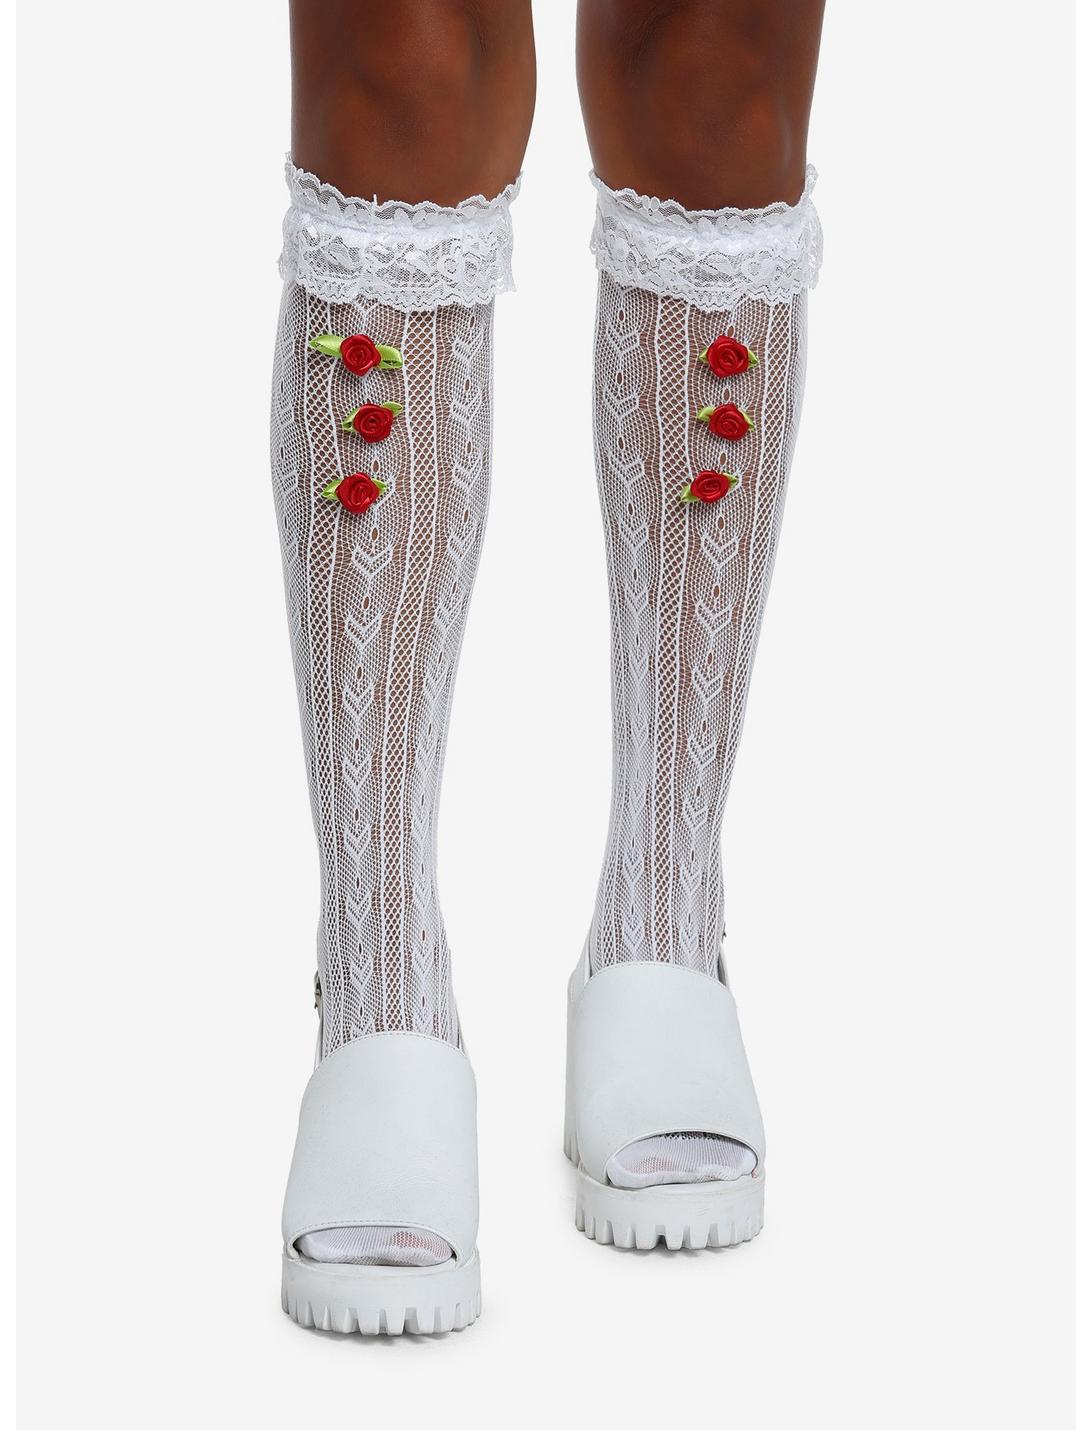 White Ruffle Rose Knee High Socks, , hi-res